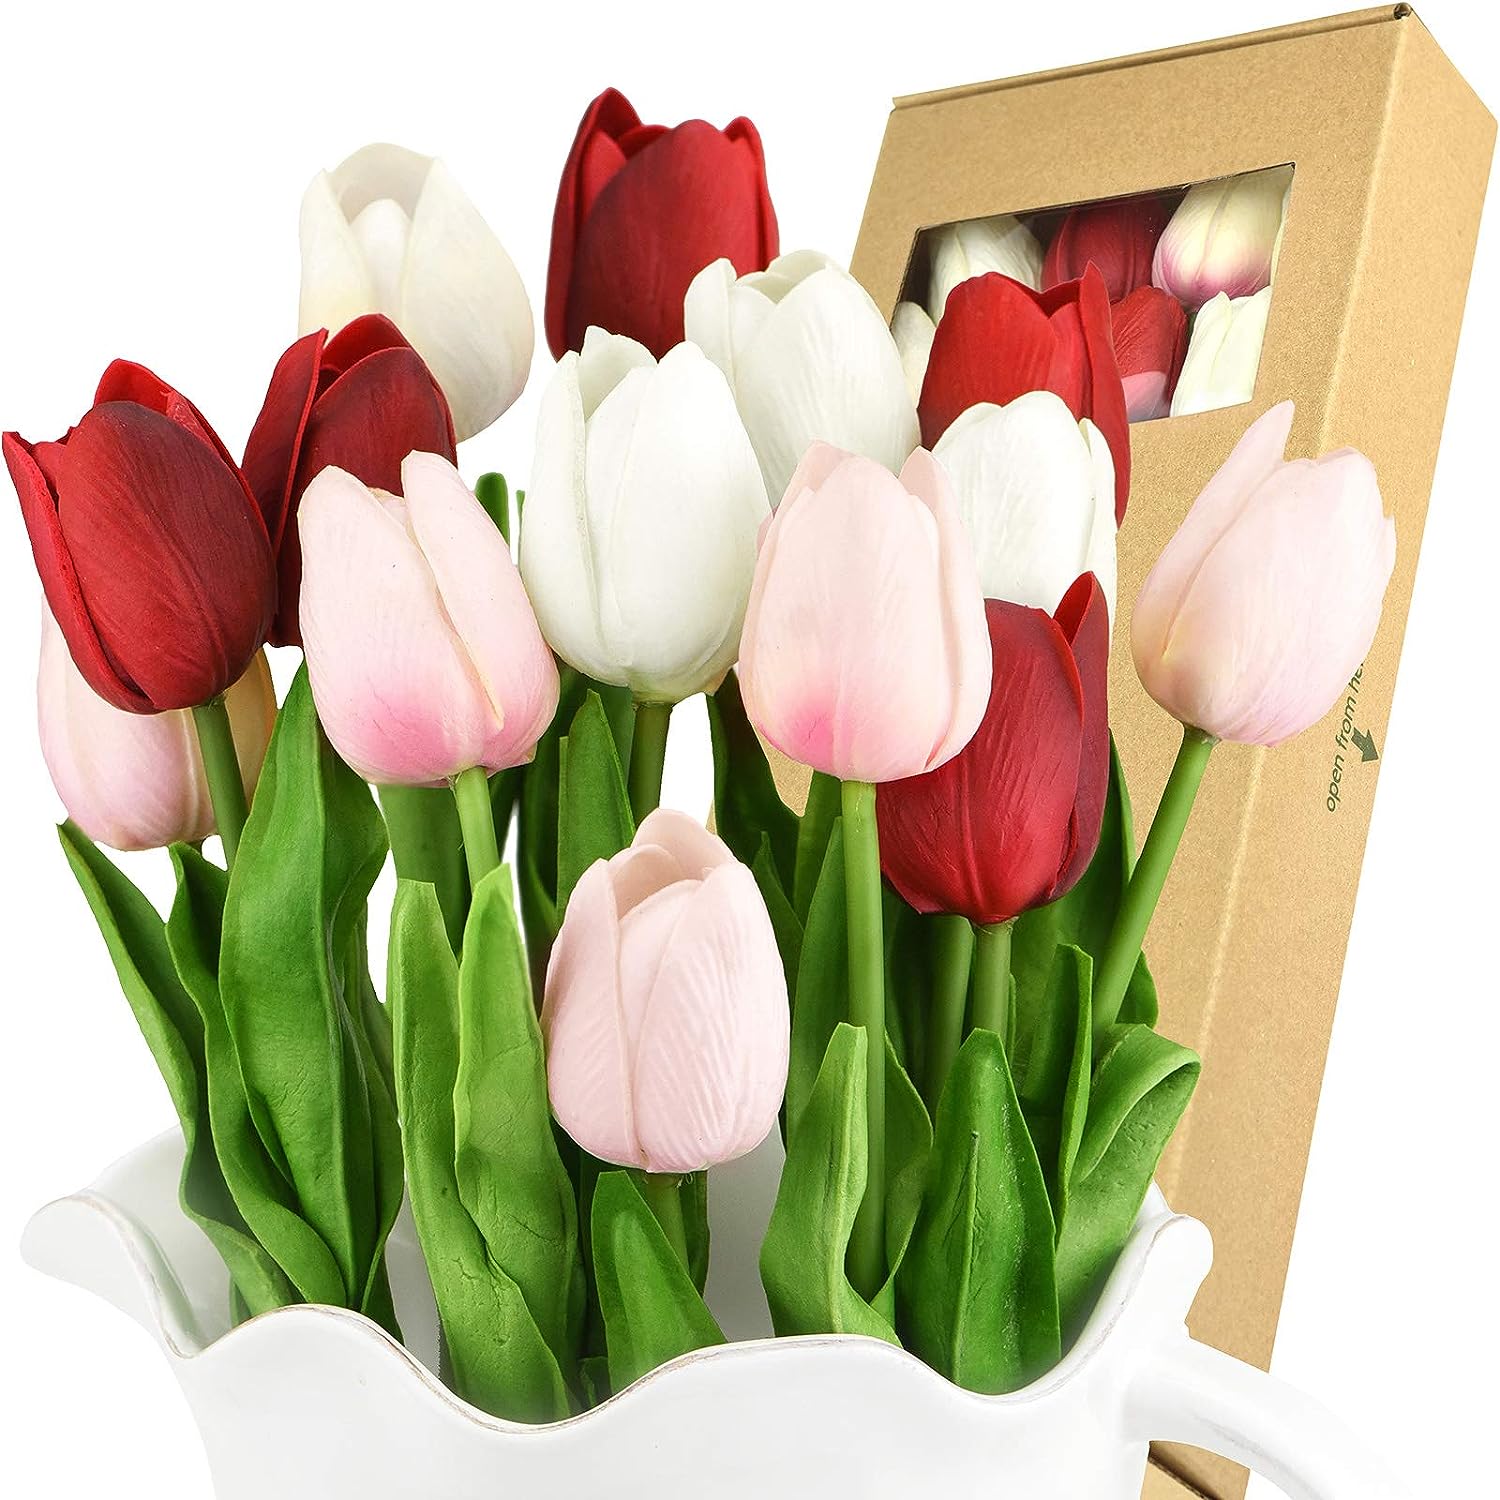 FiveSeasonStuff Tulips Artificial Flowers | Real Touch | Wedding Bouquet Home Décor Party | Floral Arrangements | 15 Stems (Charming Lady)